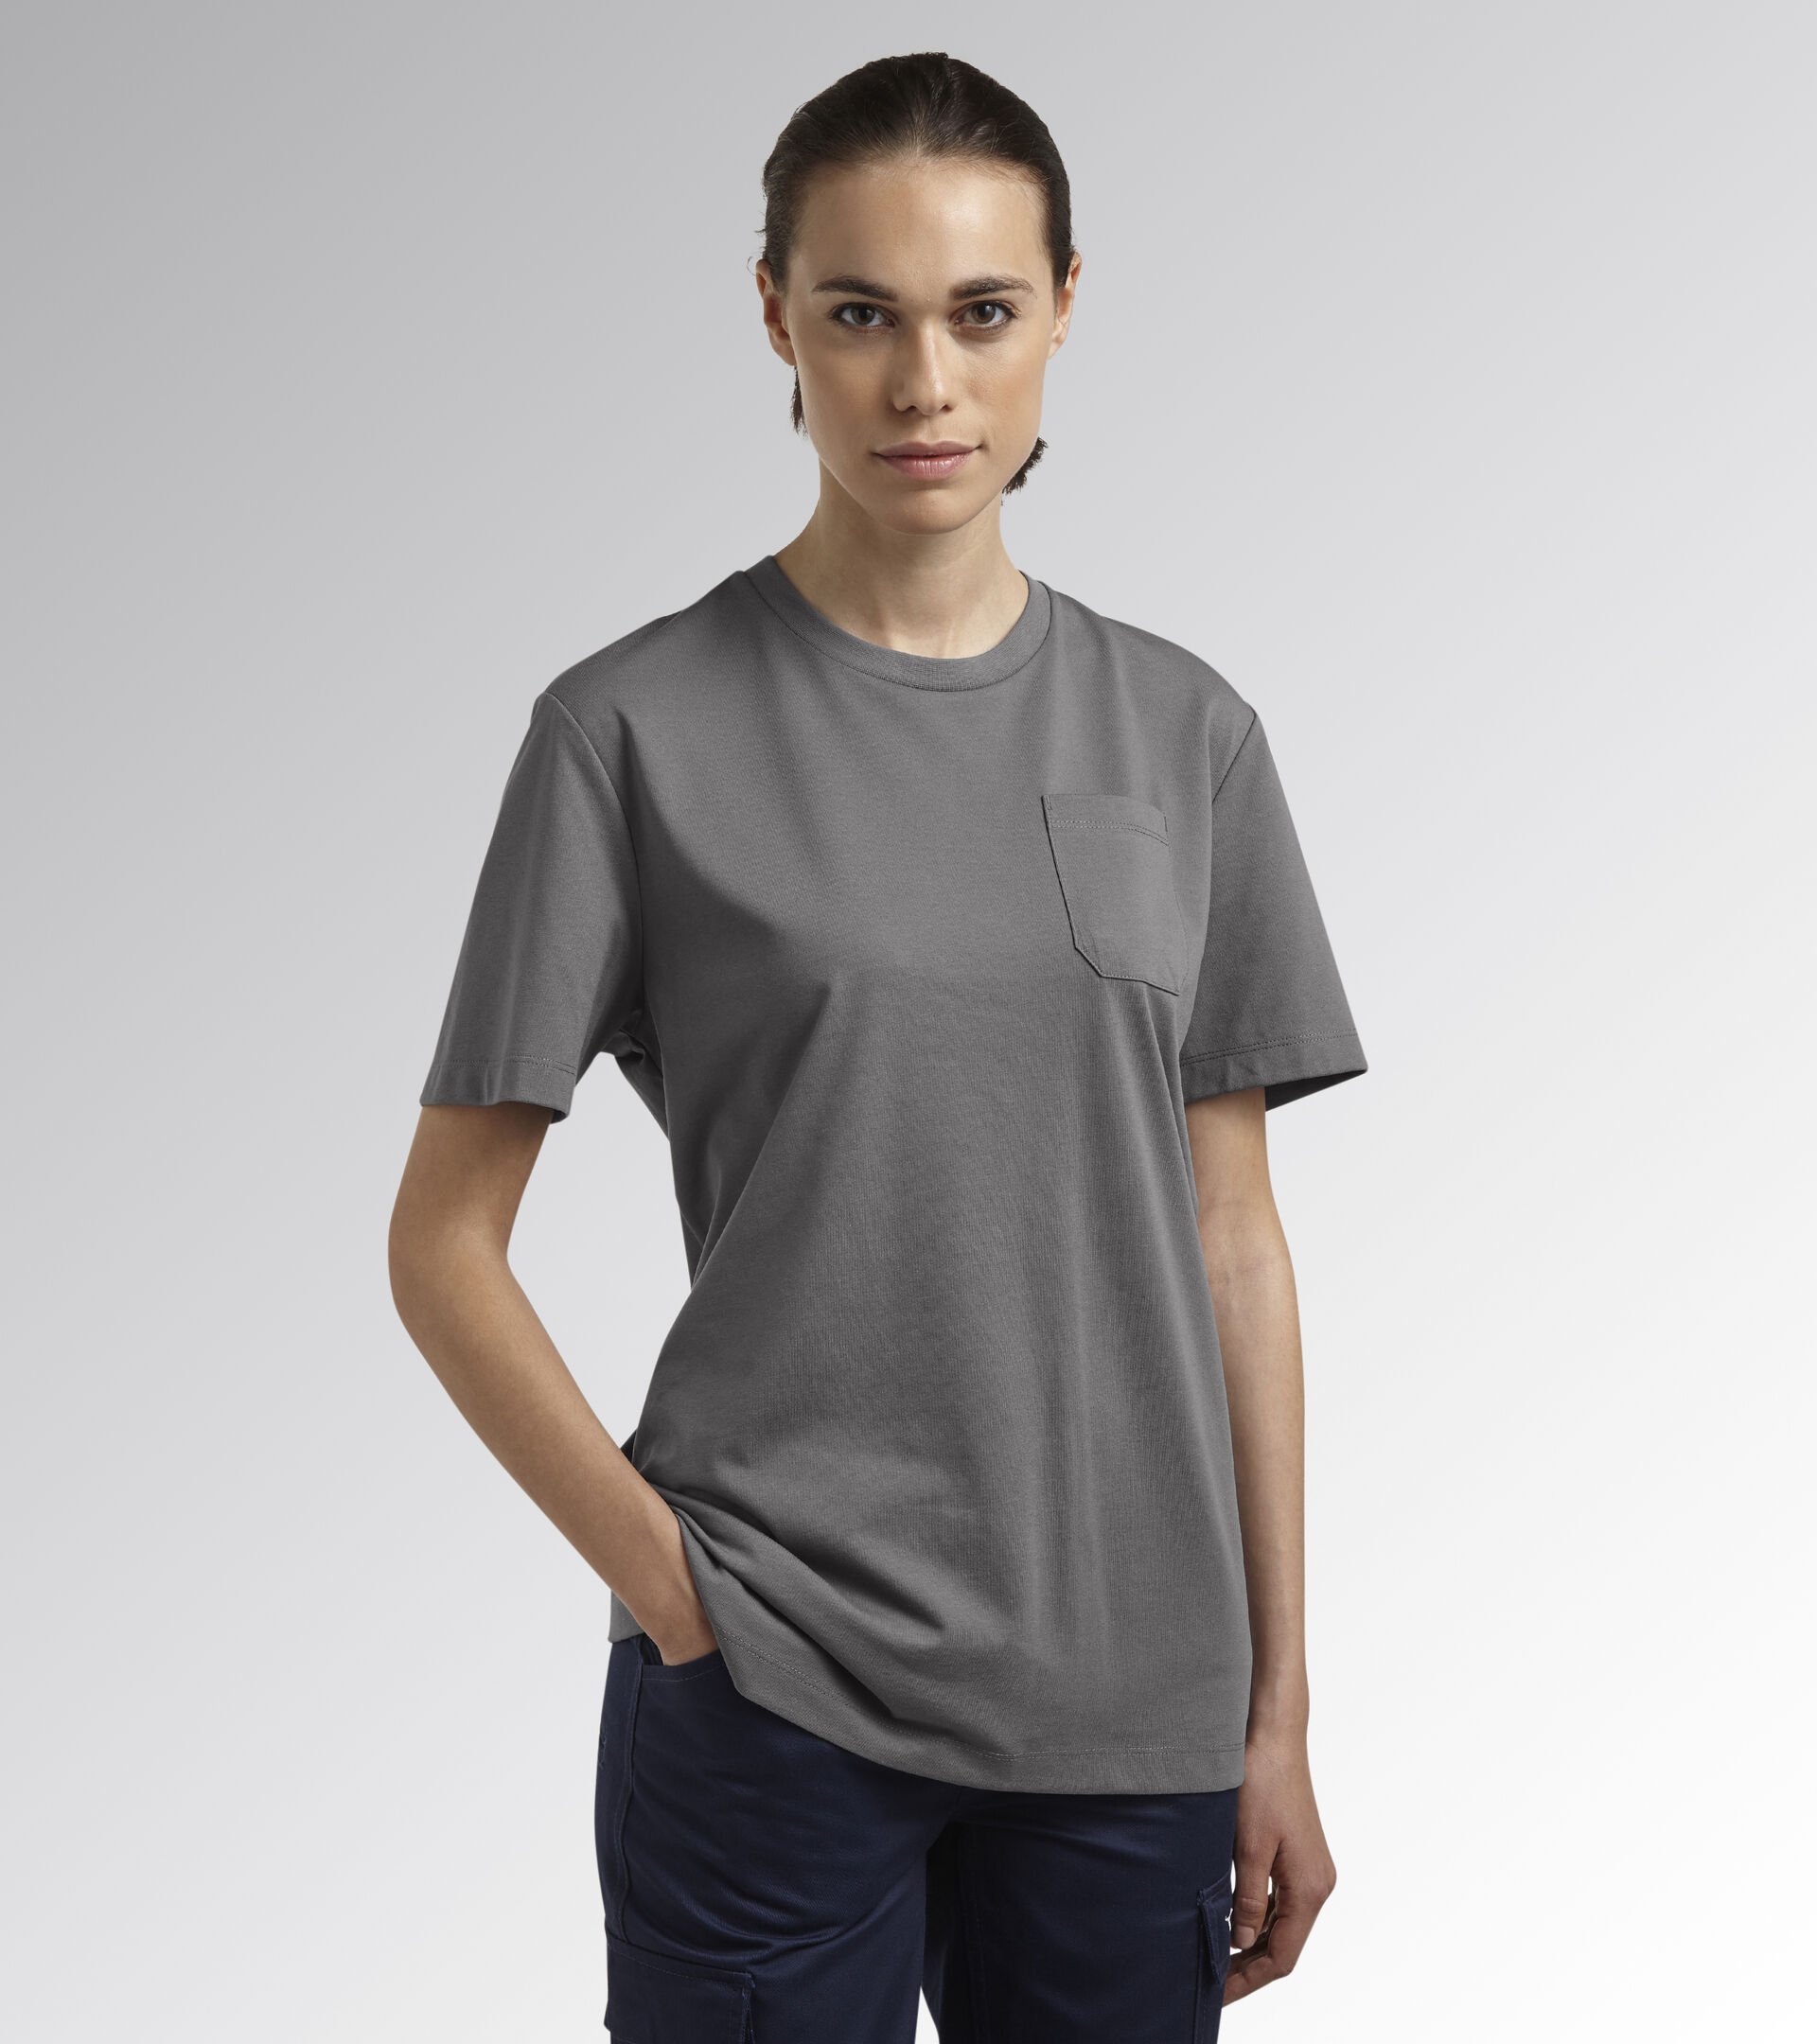 Work T-shirt T-SHIRT INDUSTRY STEEL GRAY - Utility